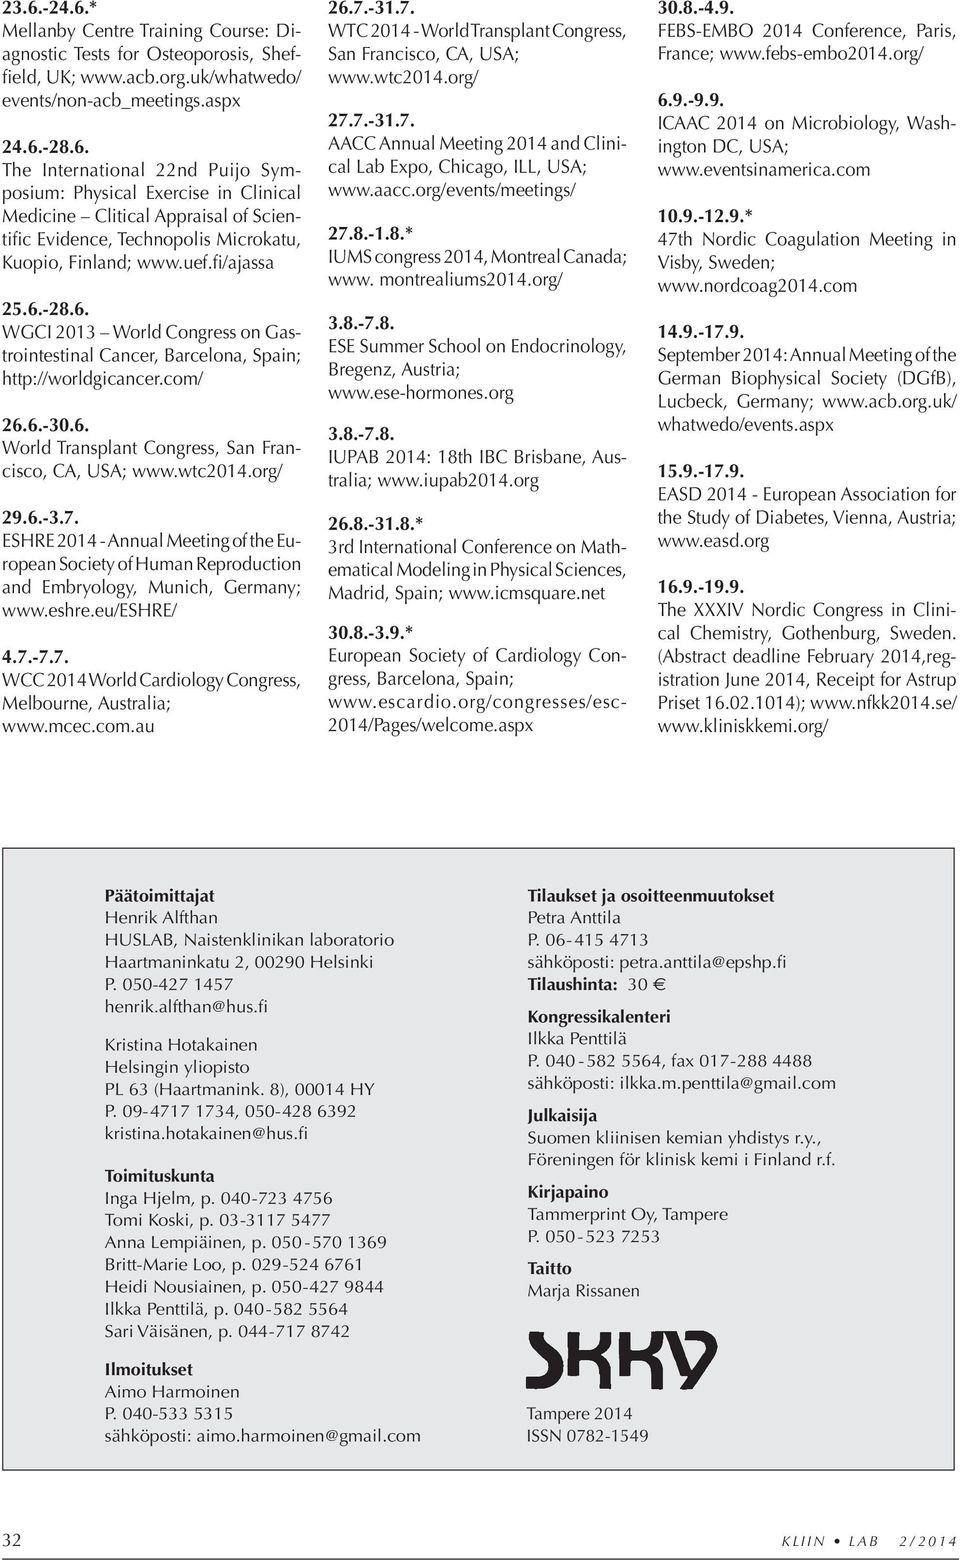 org/ 29.6.-3.7. ESHRE 2014 - Annual Meeting of the European Society of Human Reproduction and Embryology, Munich, Germany; www.eshre.eu/eshre/ 4.7.-7.7. WCC 2014 World Cardiology Congress, Melbourne, Australia; www.